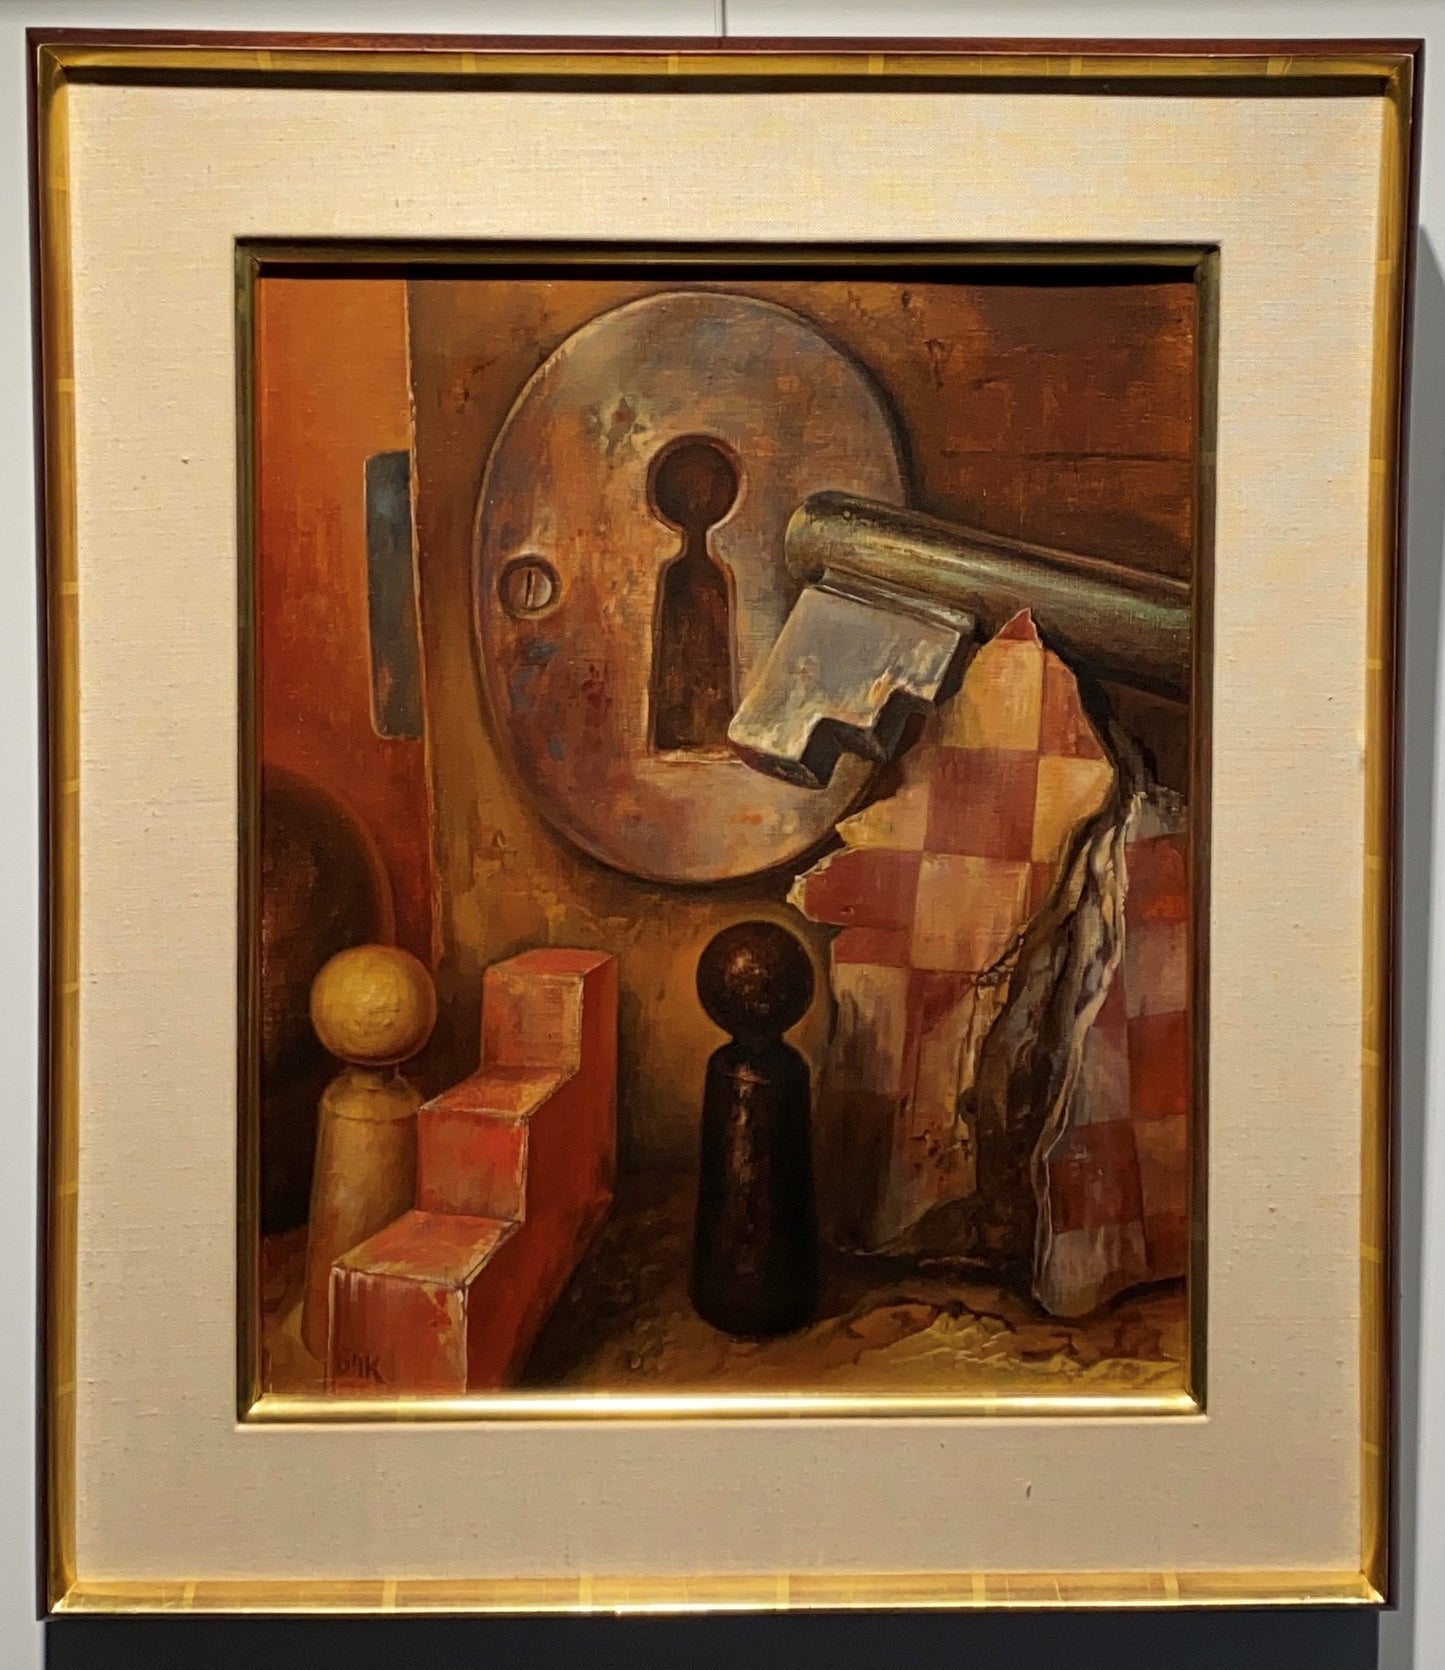 Samuel Bak | Opening, 1985 | Oil on canvas, 46x38